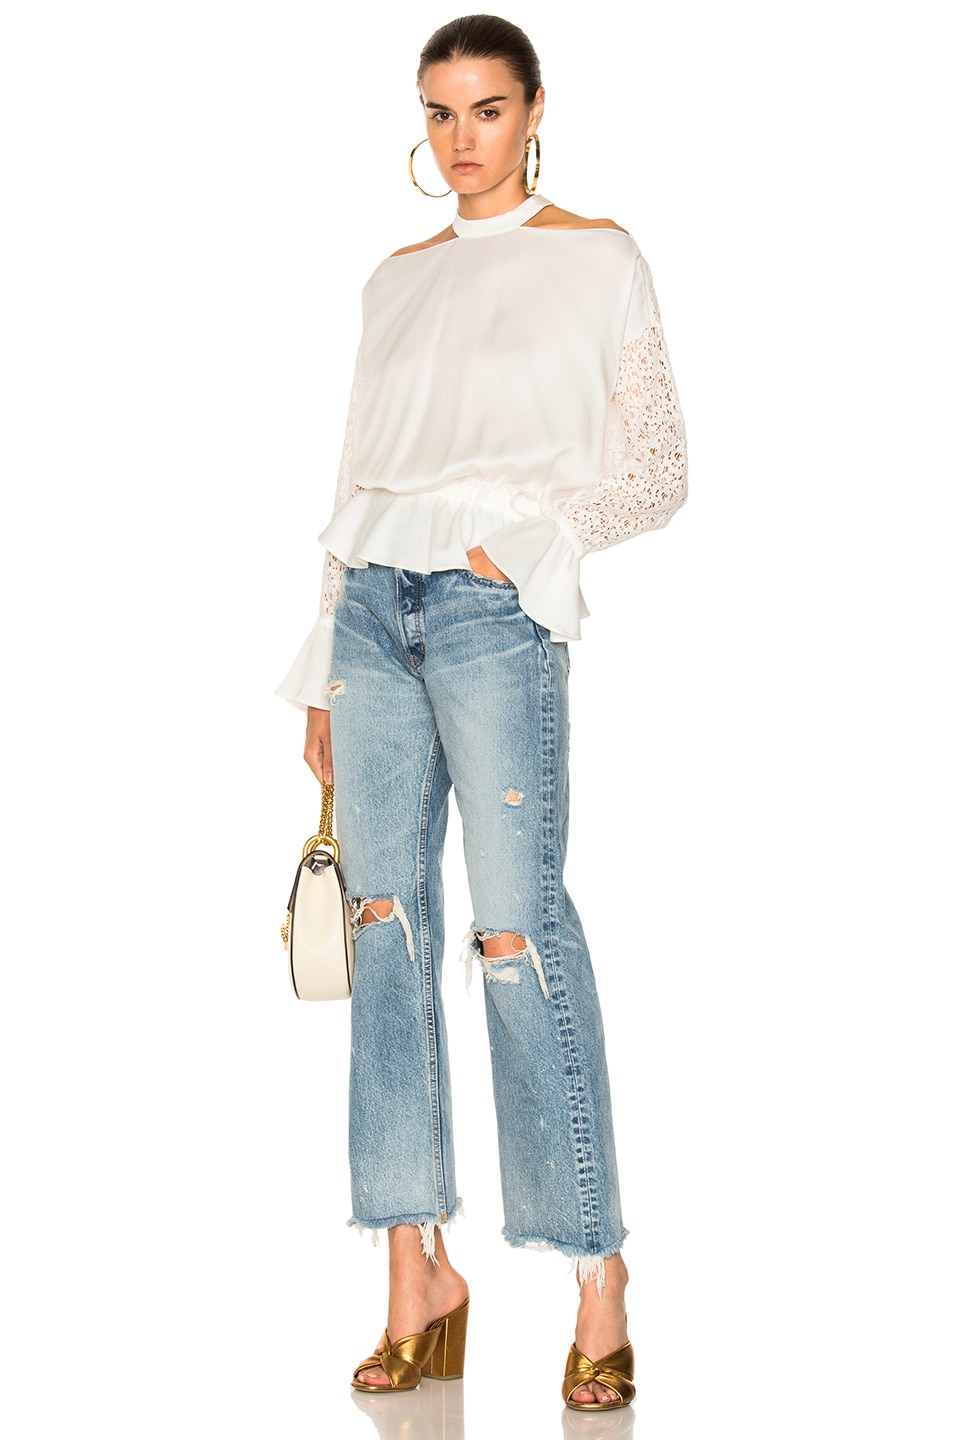 MARISSA WEBB Sullivan Lace Top in Lace White Combo | ModeSens